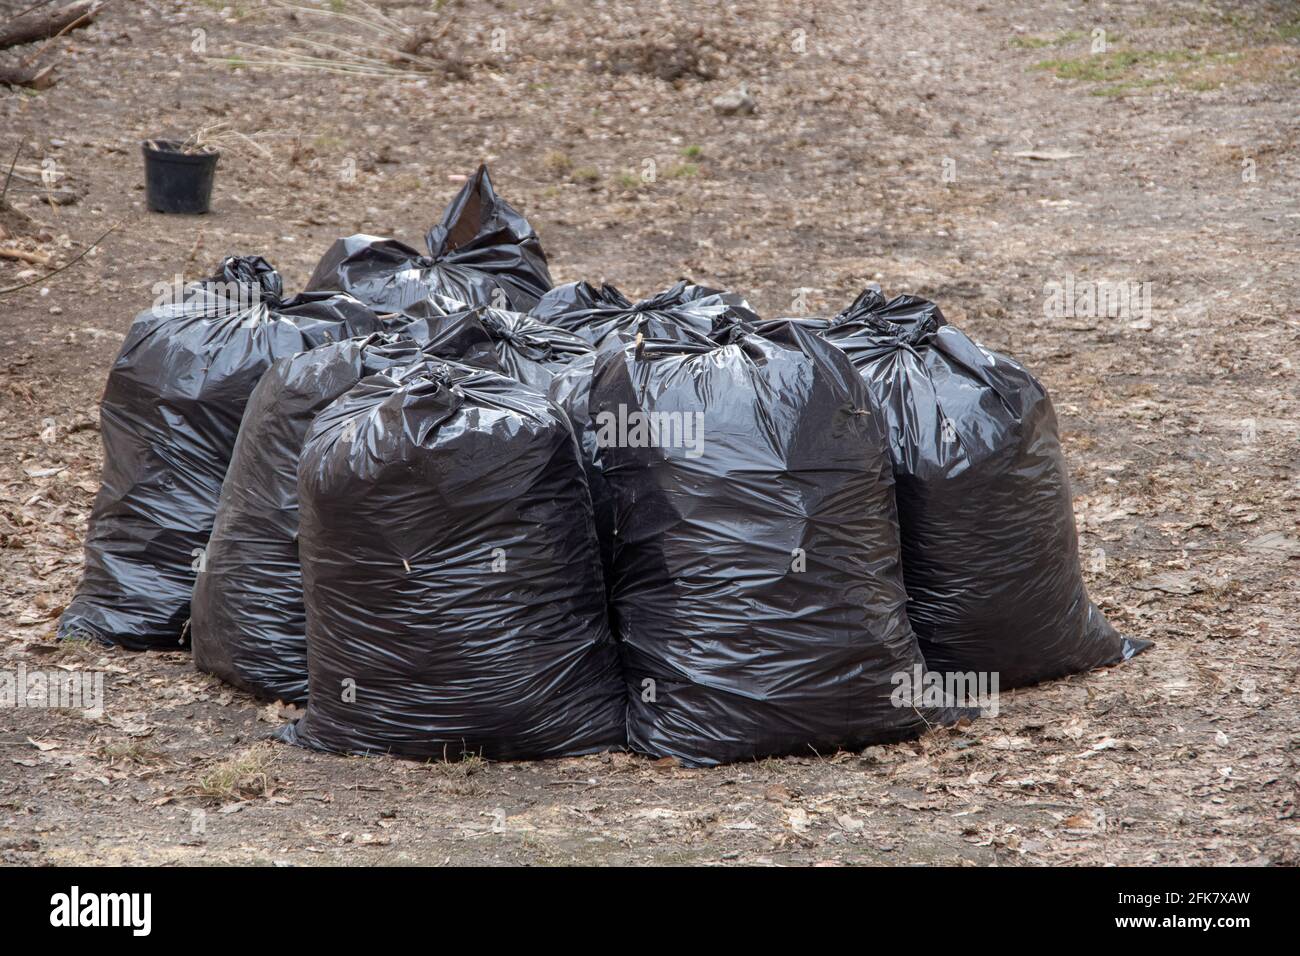 Large overflowing black trash bags full of raked up dry tree